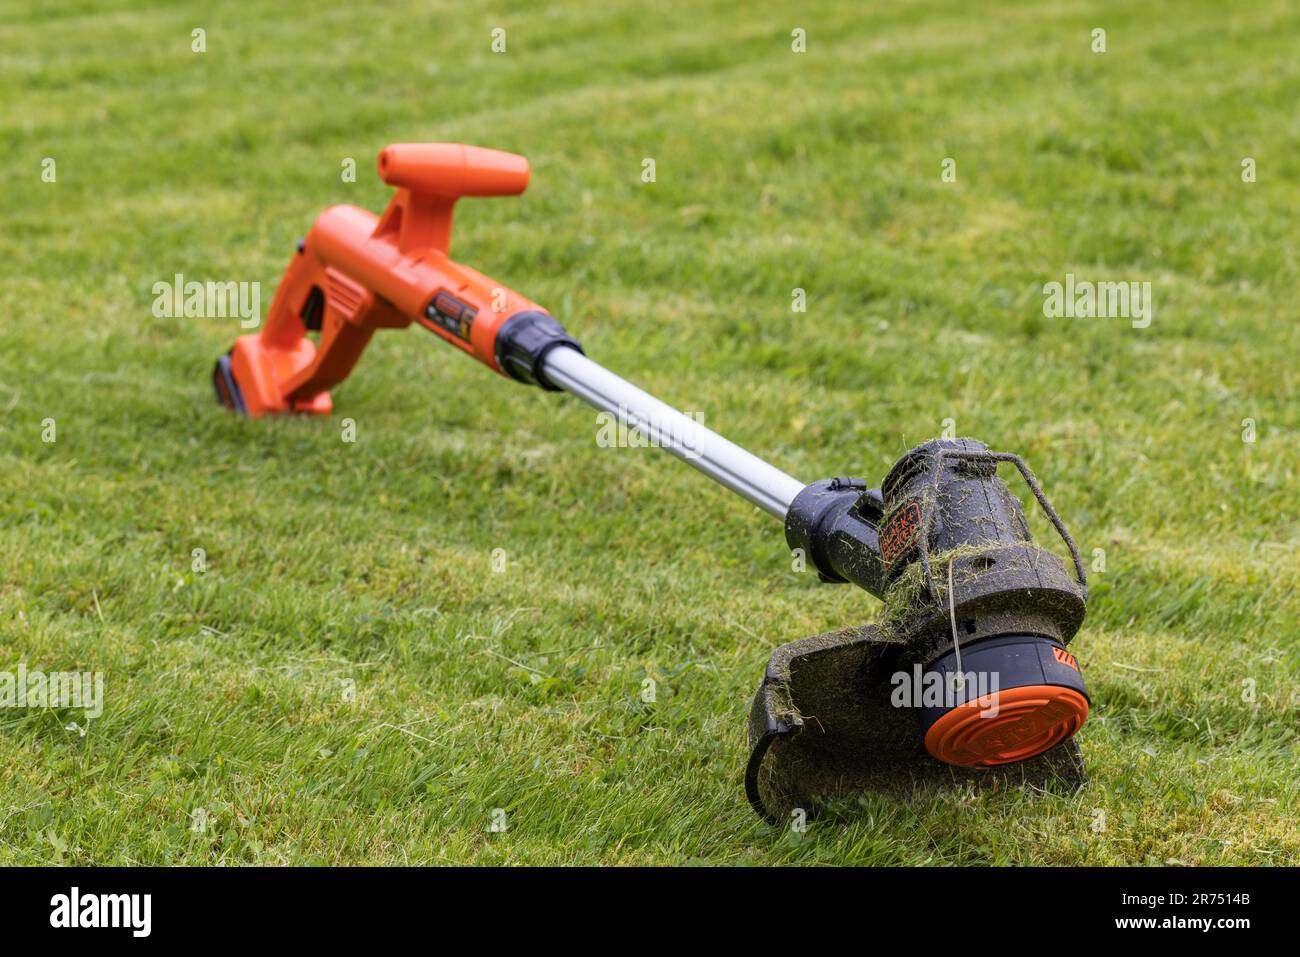 https://c8.alamy.com/comp/2R7514B/black-decker-cordless-lawn-trimmer-is-on-lawn-lawn-care-garden-2R7514B.jpg